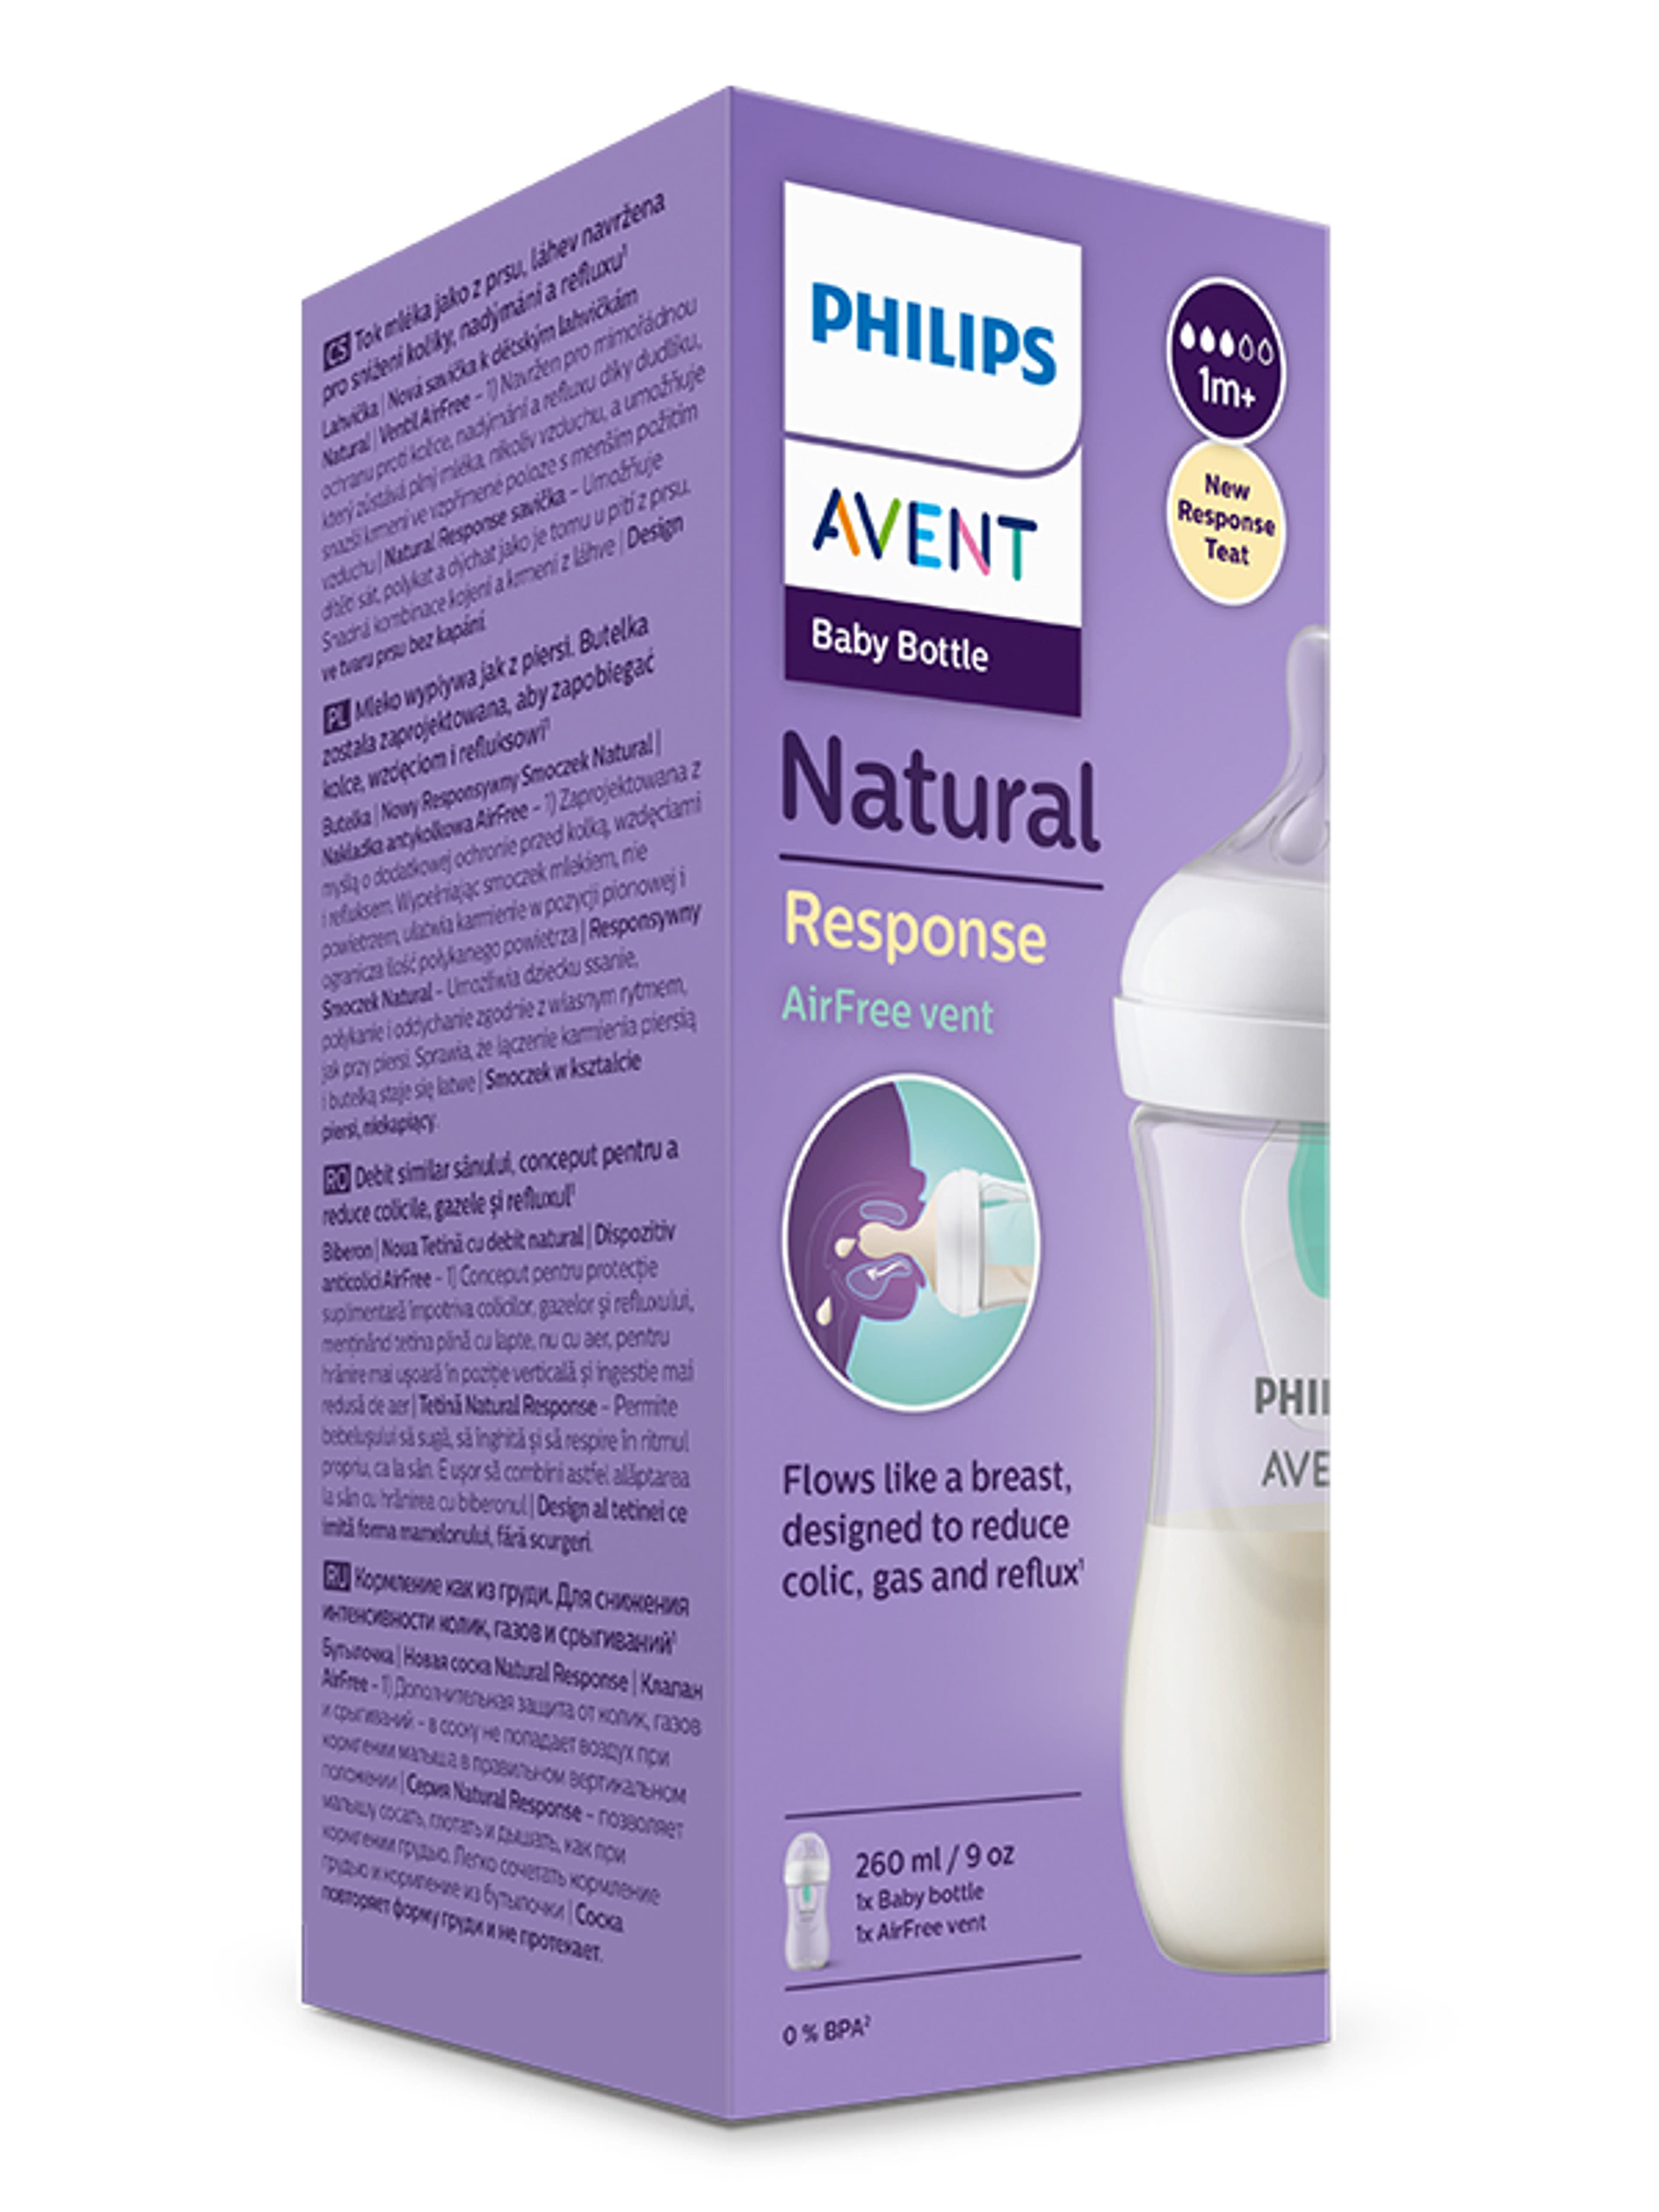 Philips Avent Natural Response AirFree cumisüveg 1 hónapos kortól, 260 ml - 1 db-3